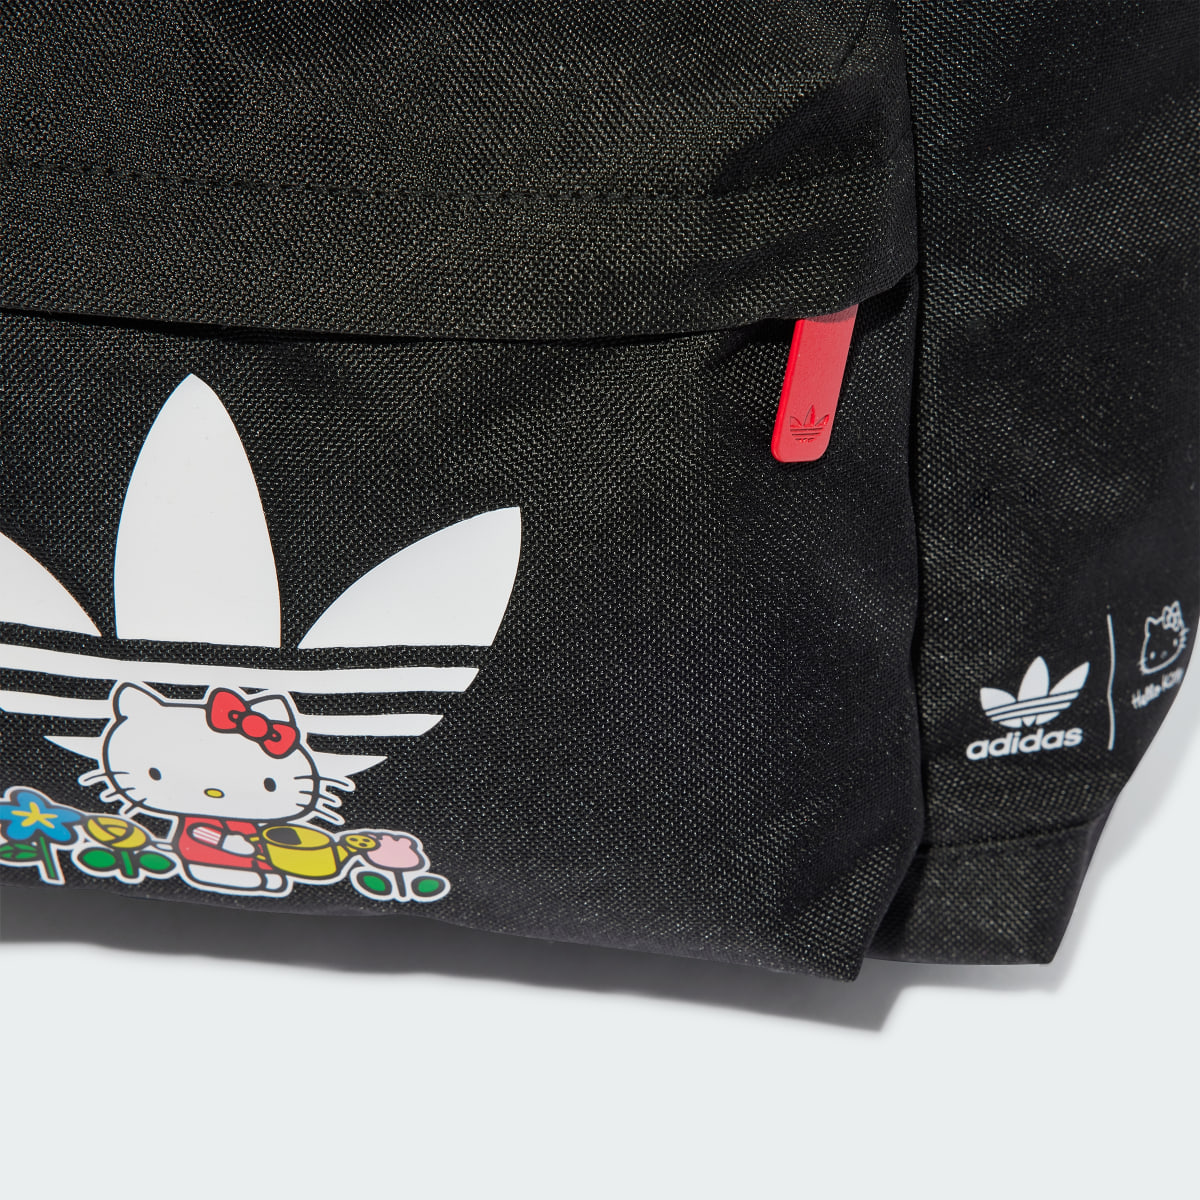 Adidas Plecak adidas x Hello Kitty Kids. 7